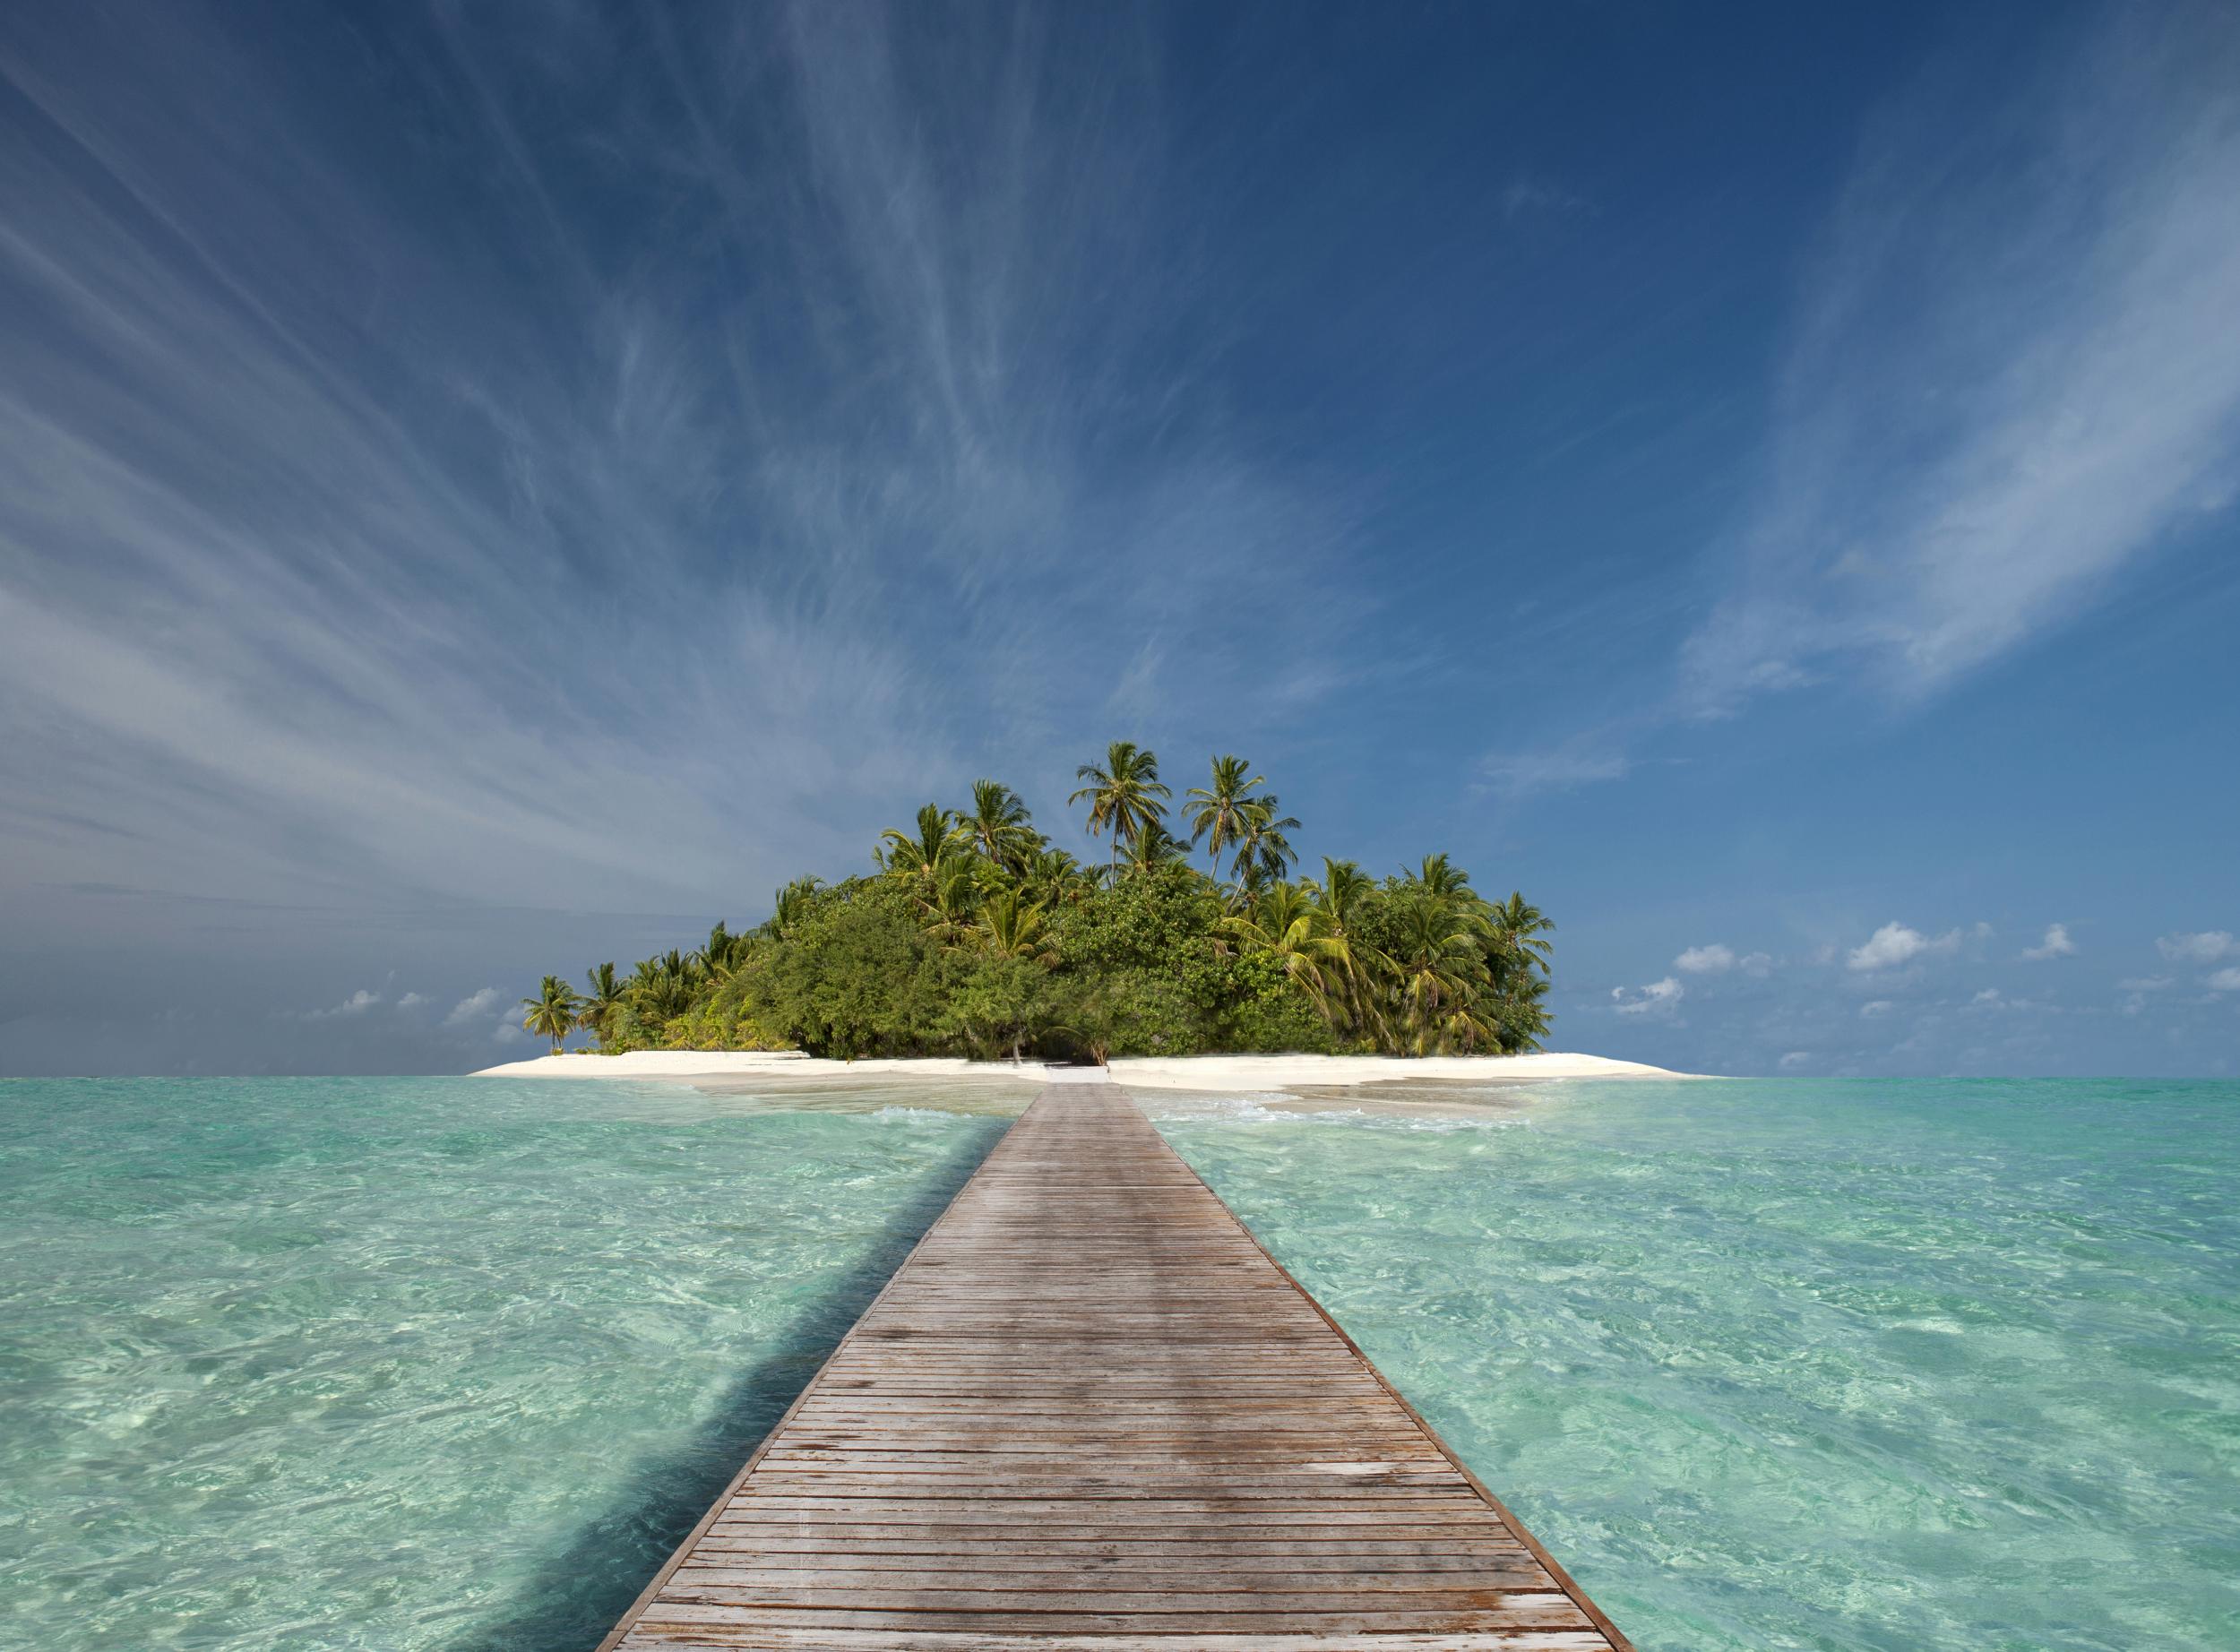 The Maldives reward relaxation